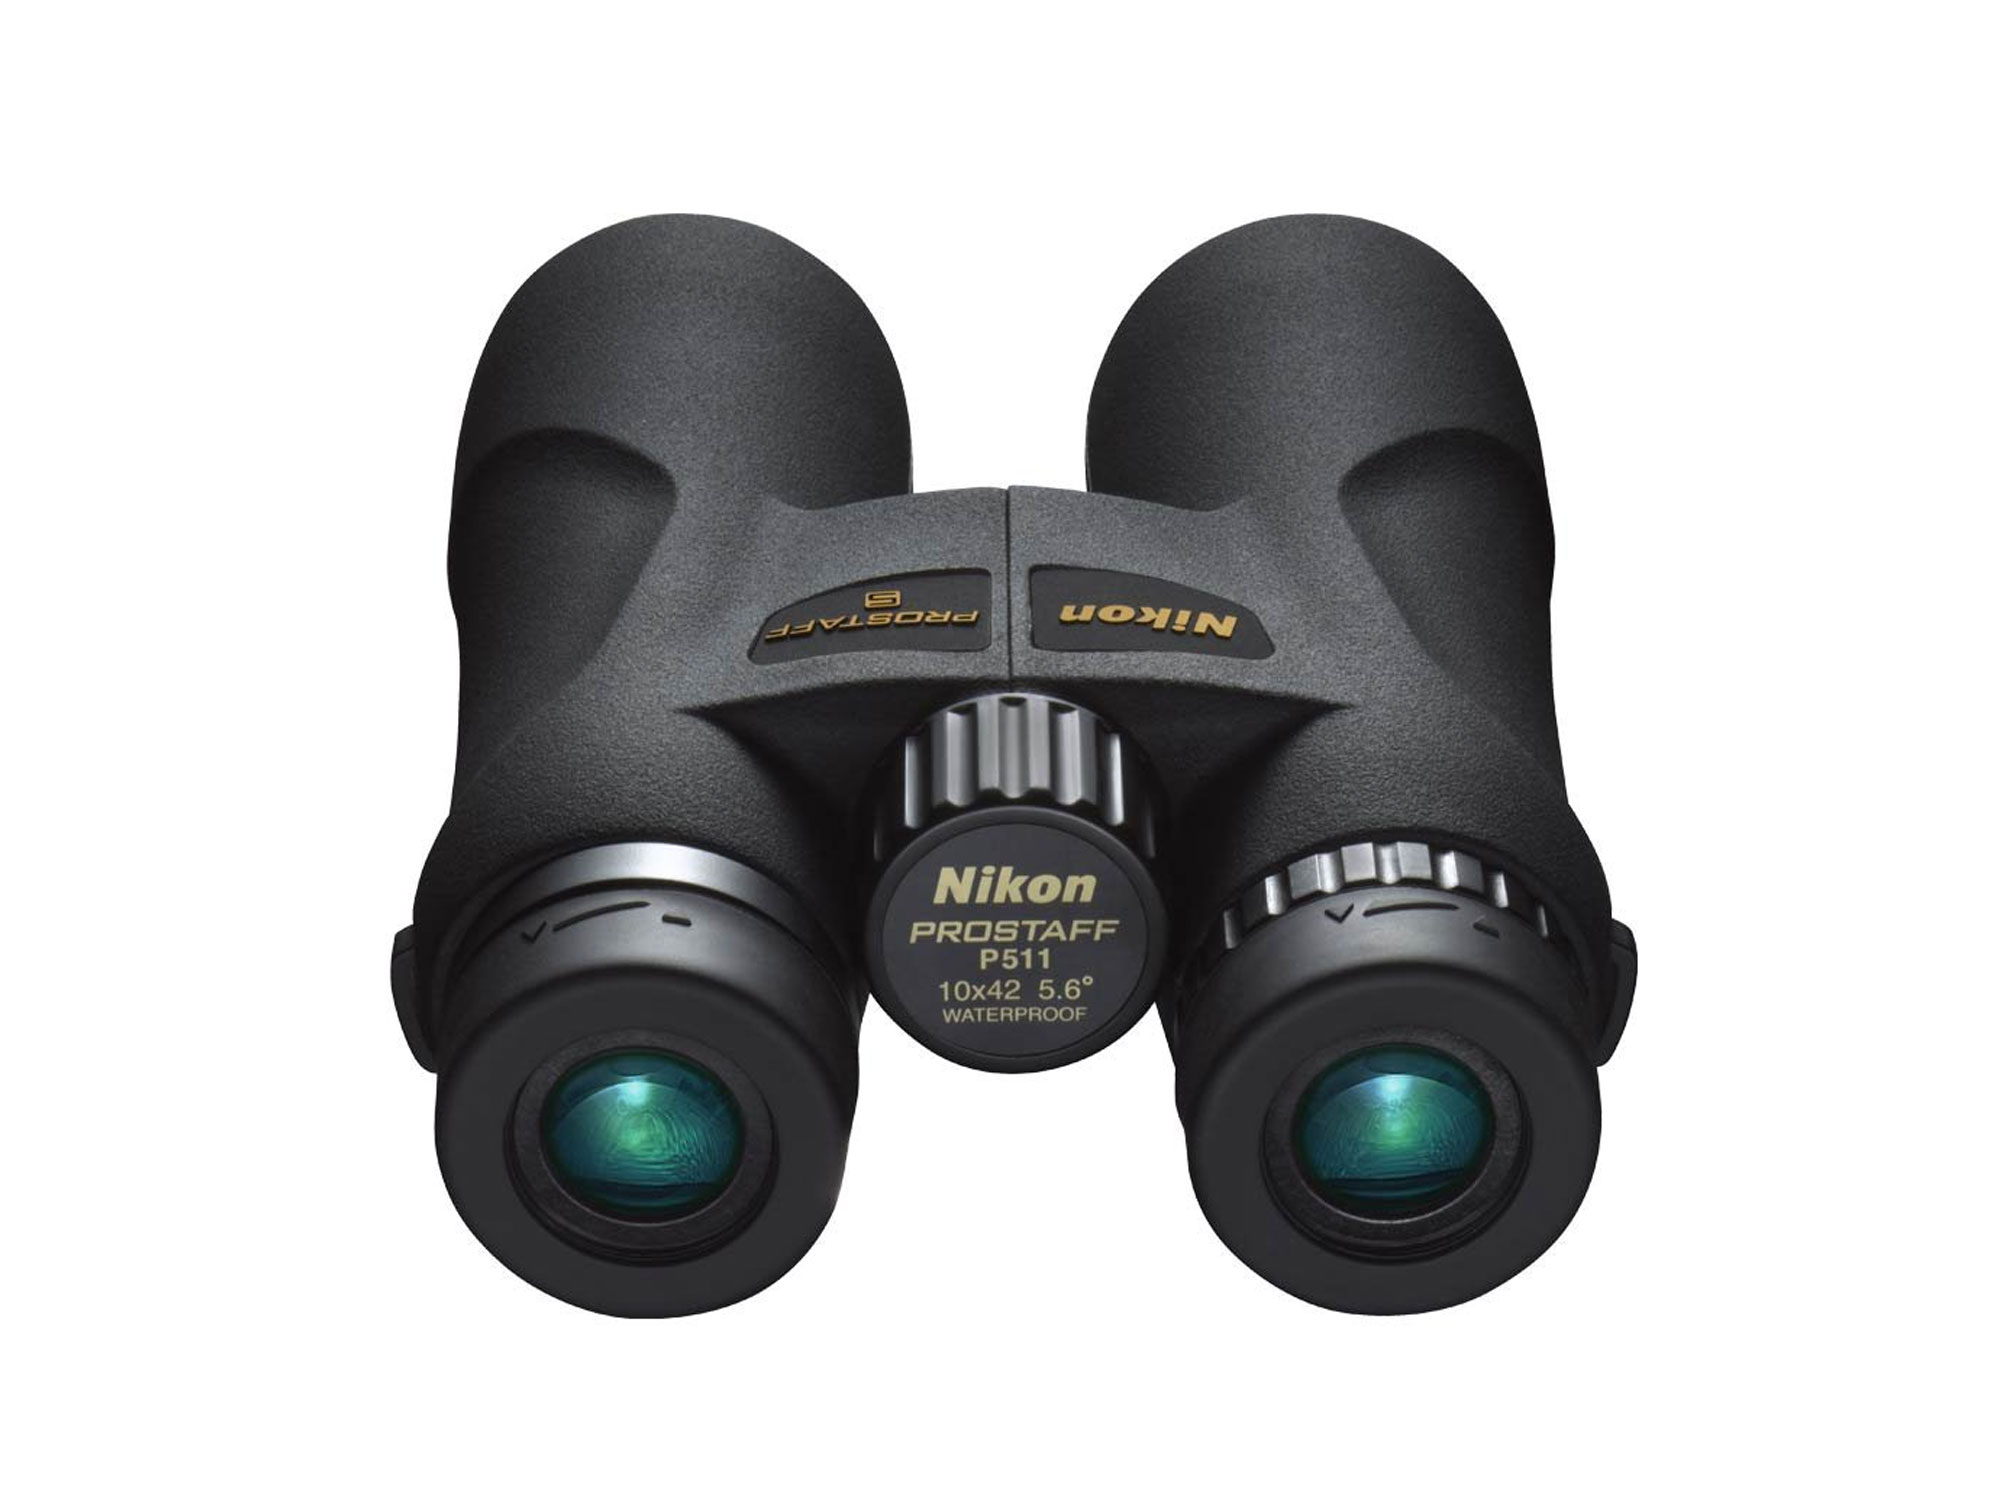 Nikon Prostaff binoculars